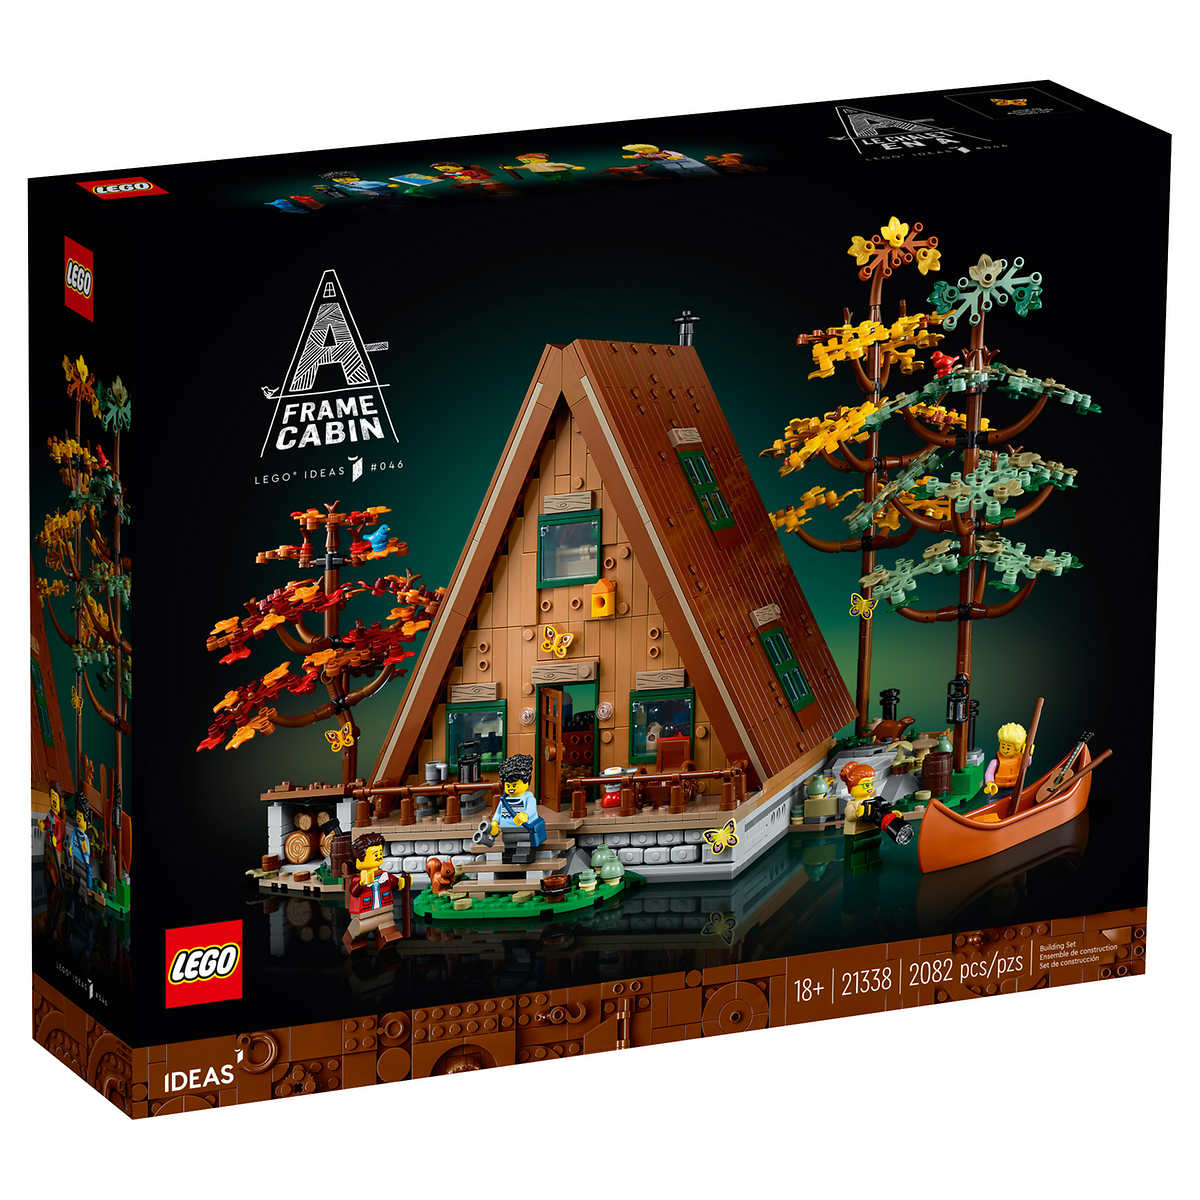 Costco Members: LEGO Ideas A-Frame Cabin, 2082-Piece 21338